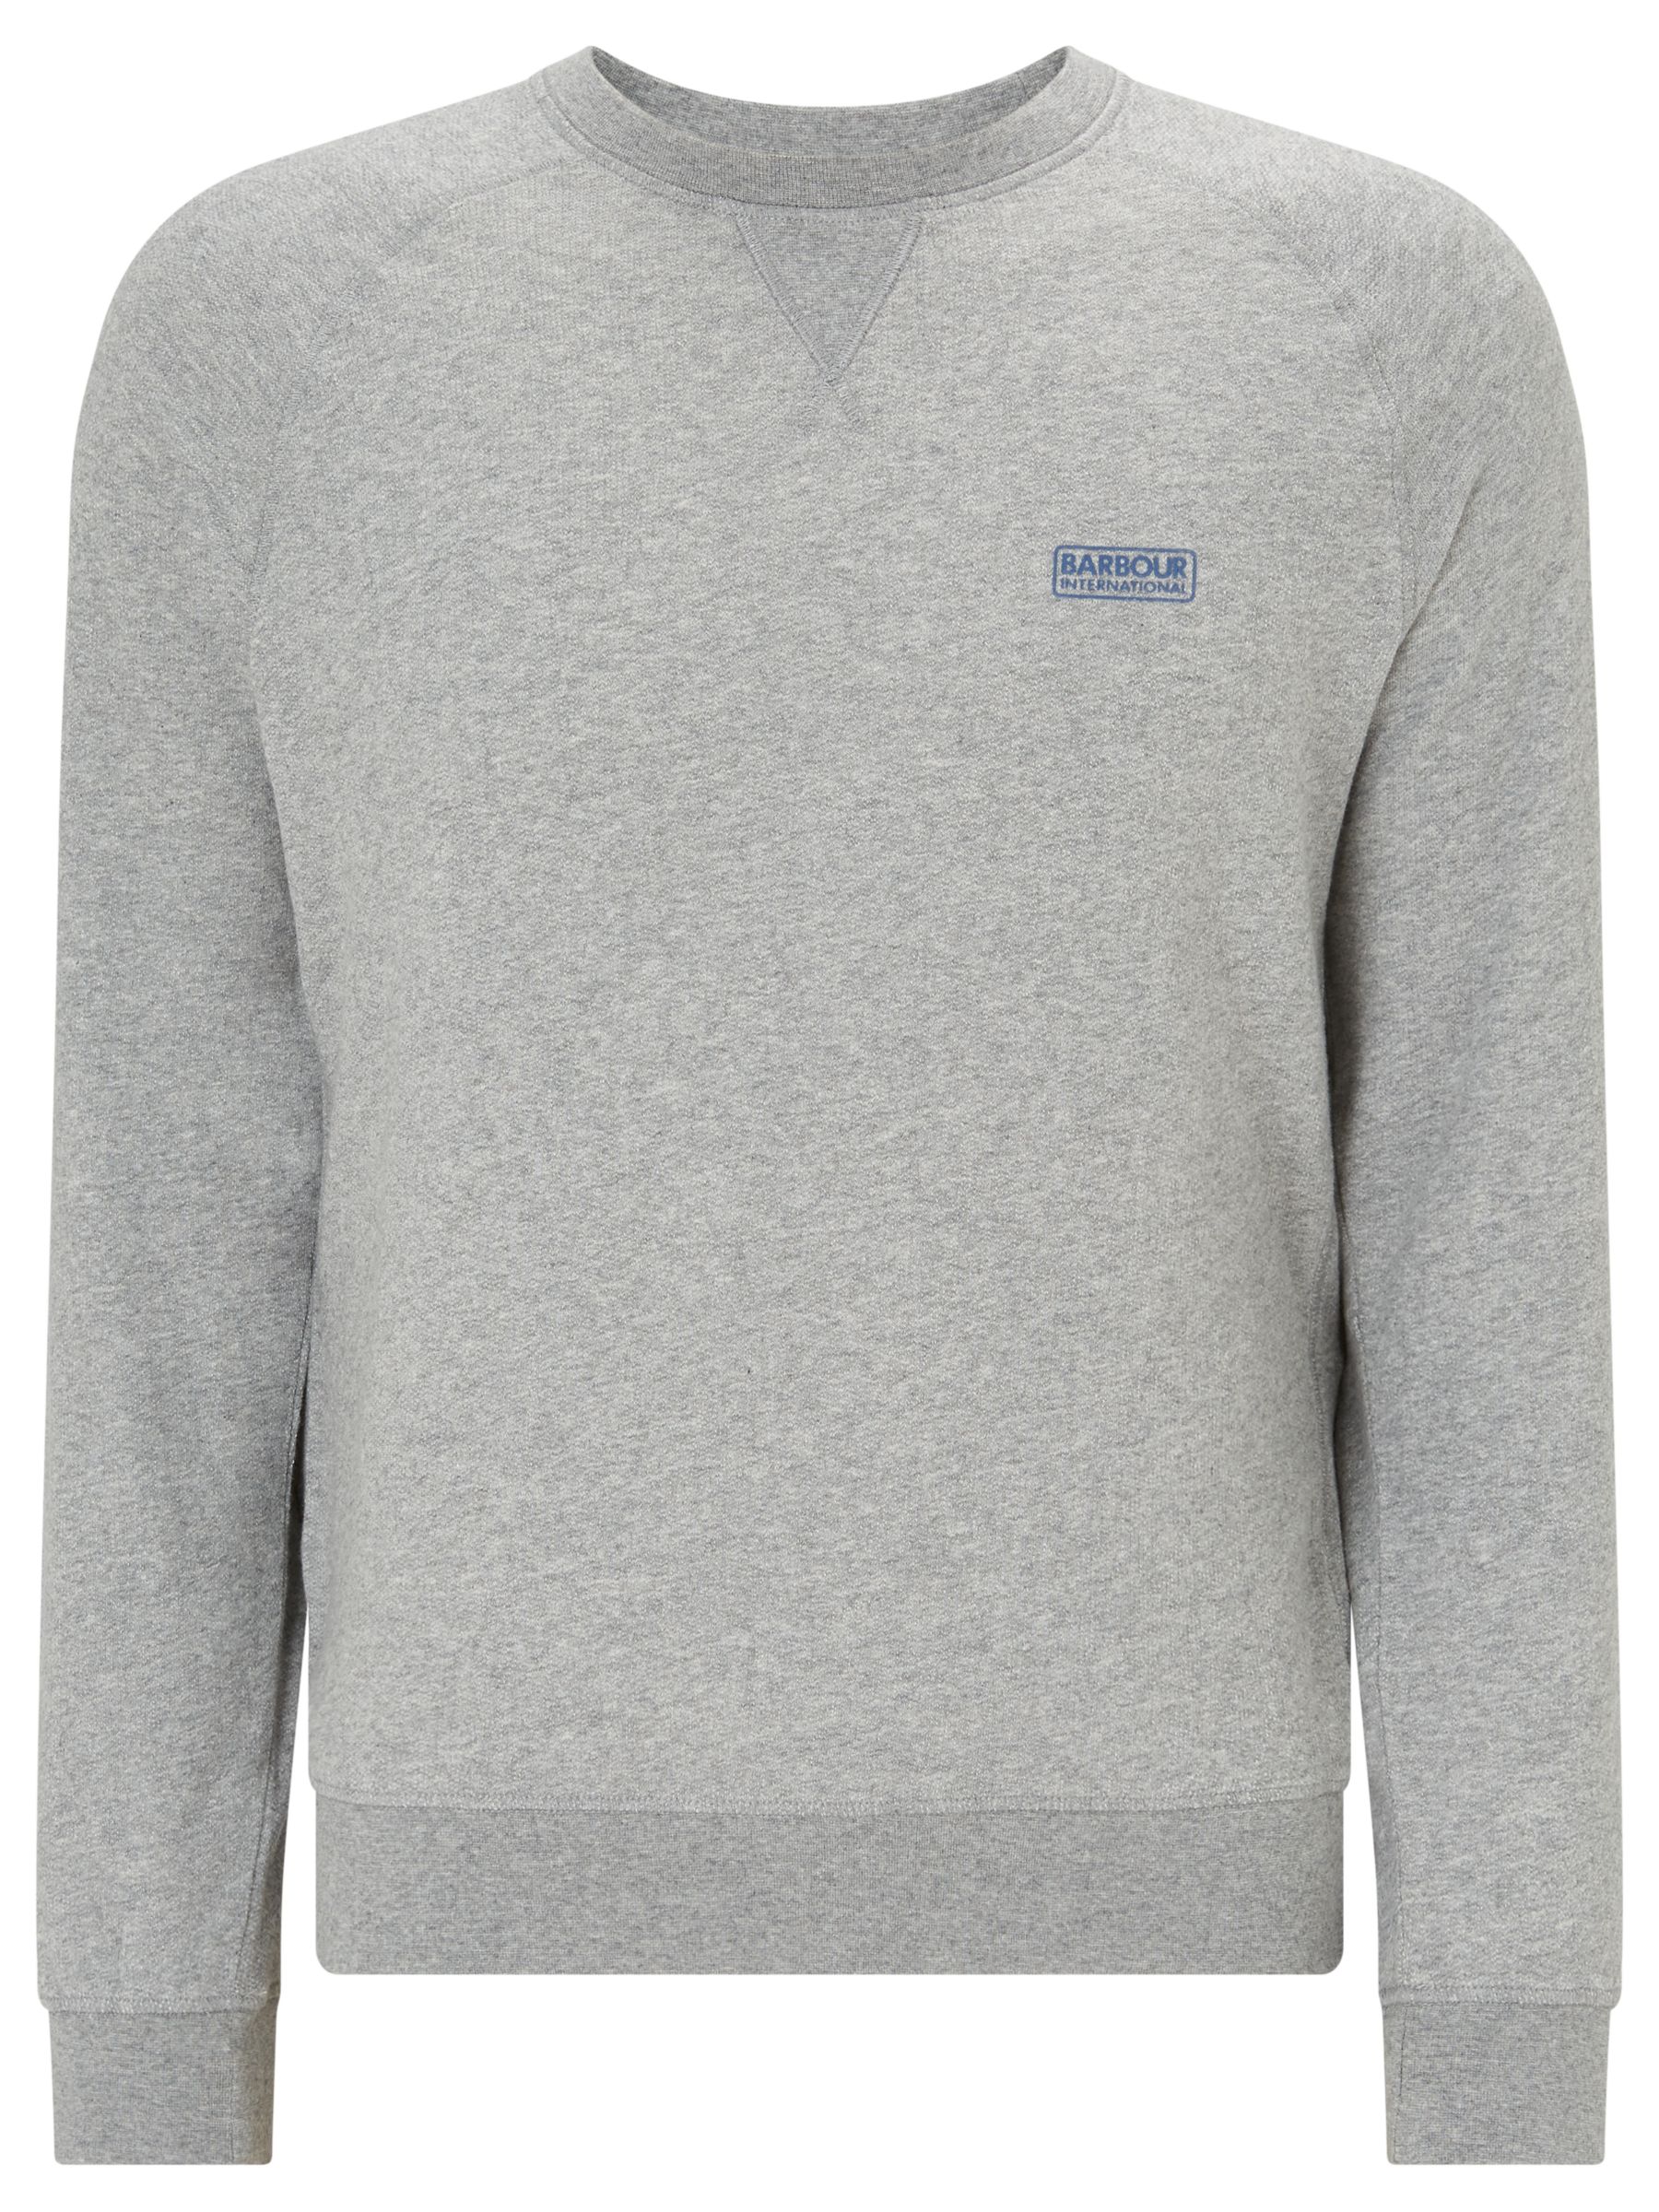 barbour international sweatshirt grey